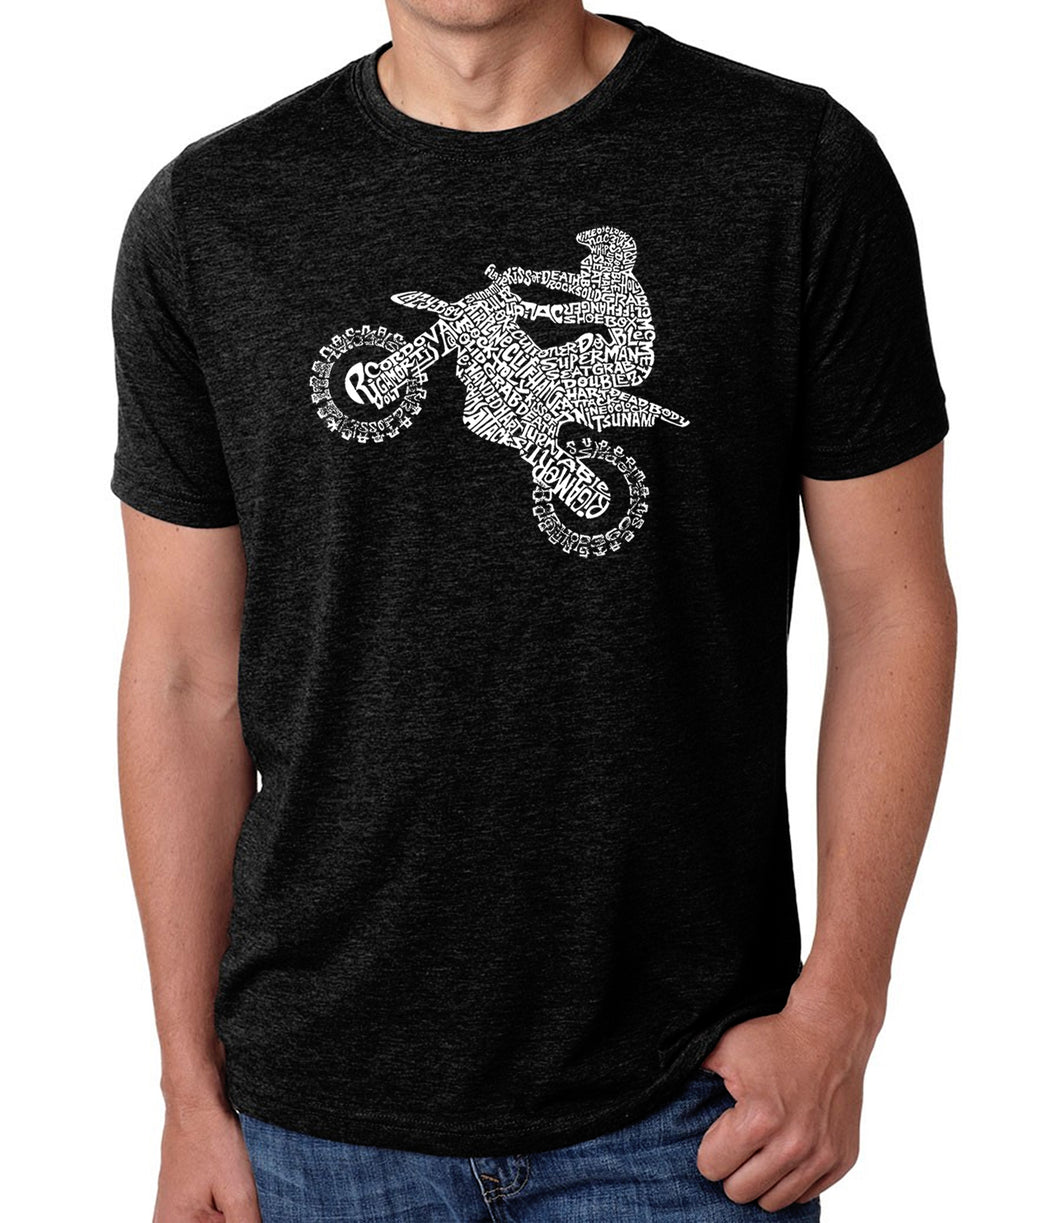 FMX Freestyle Motocross - Men's Premium Blend Word Art T-Shirt